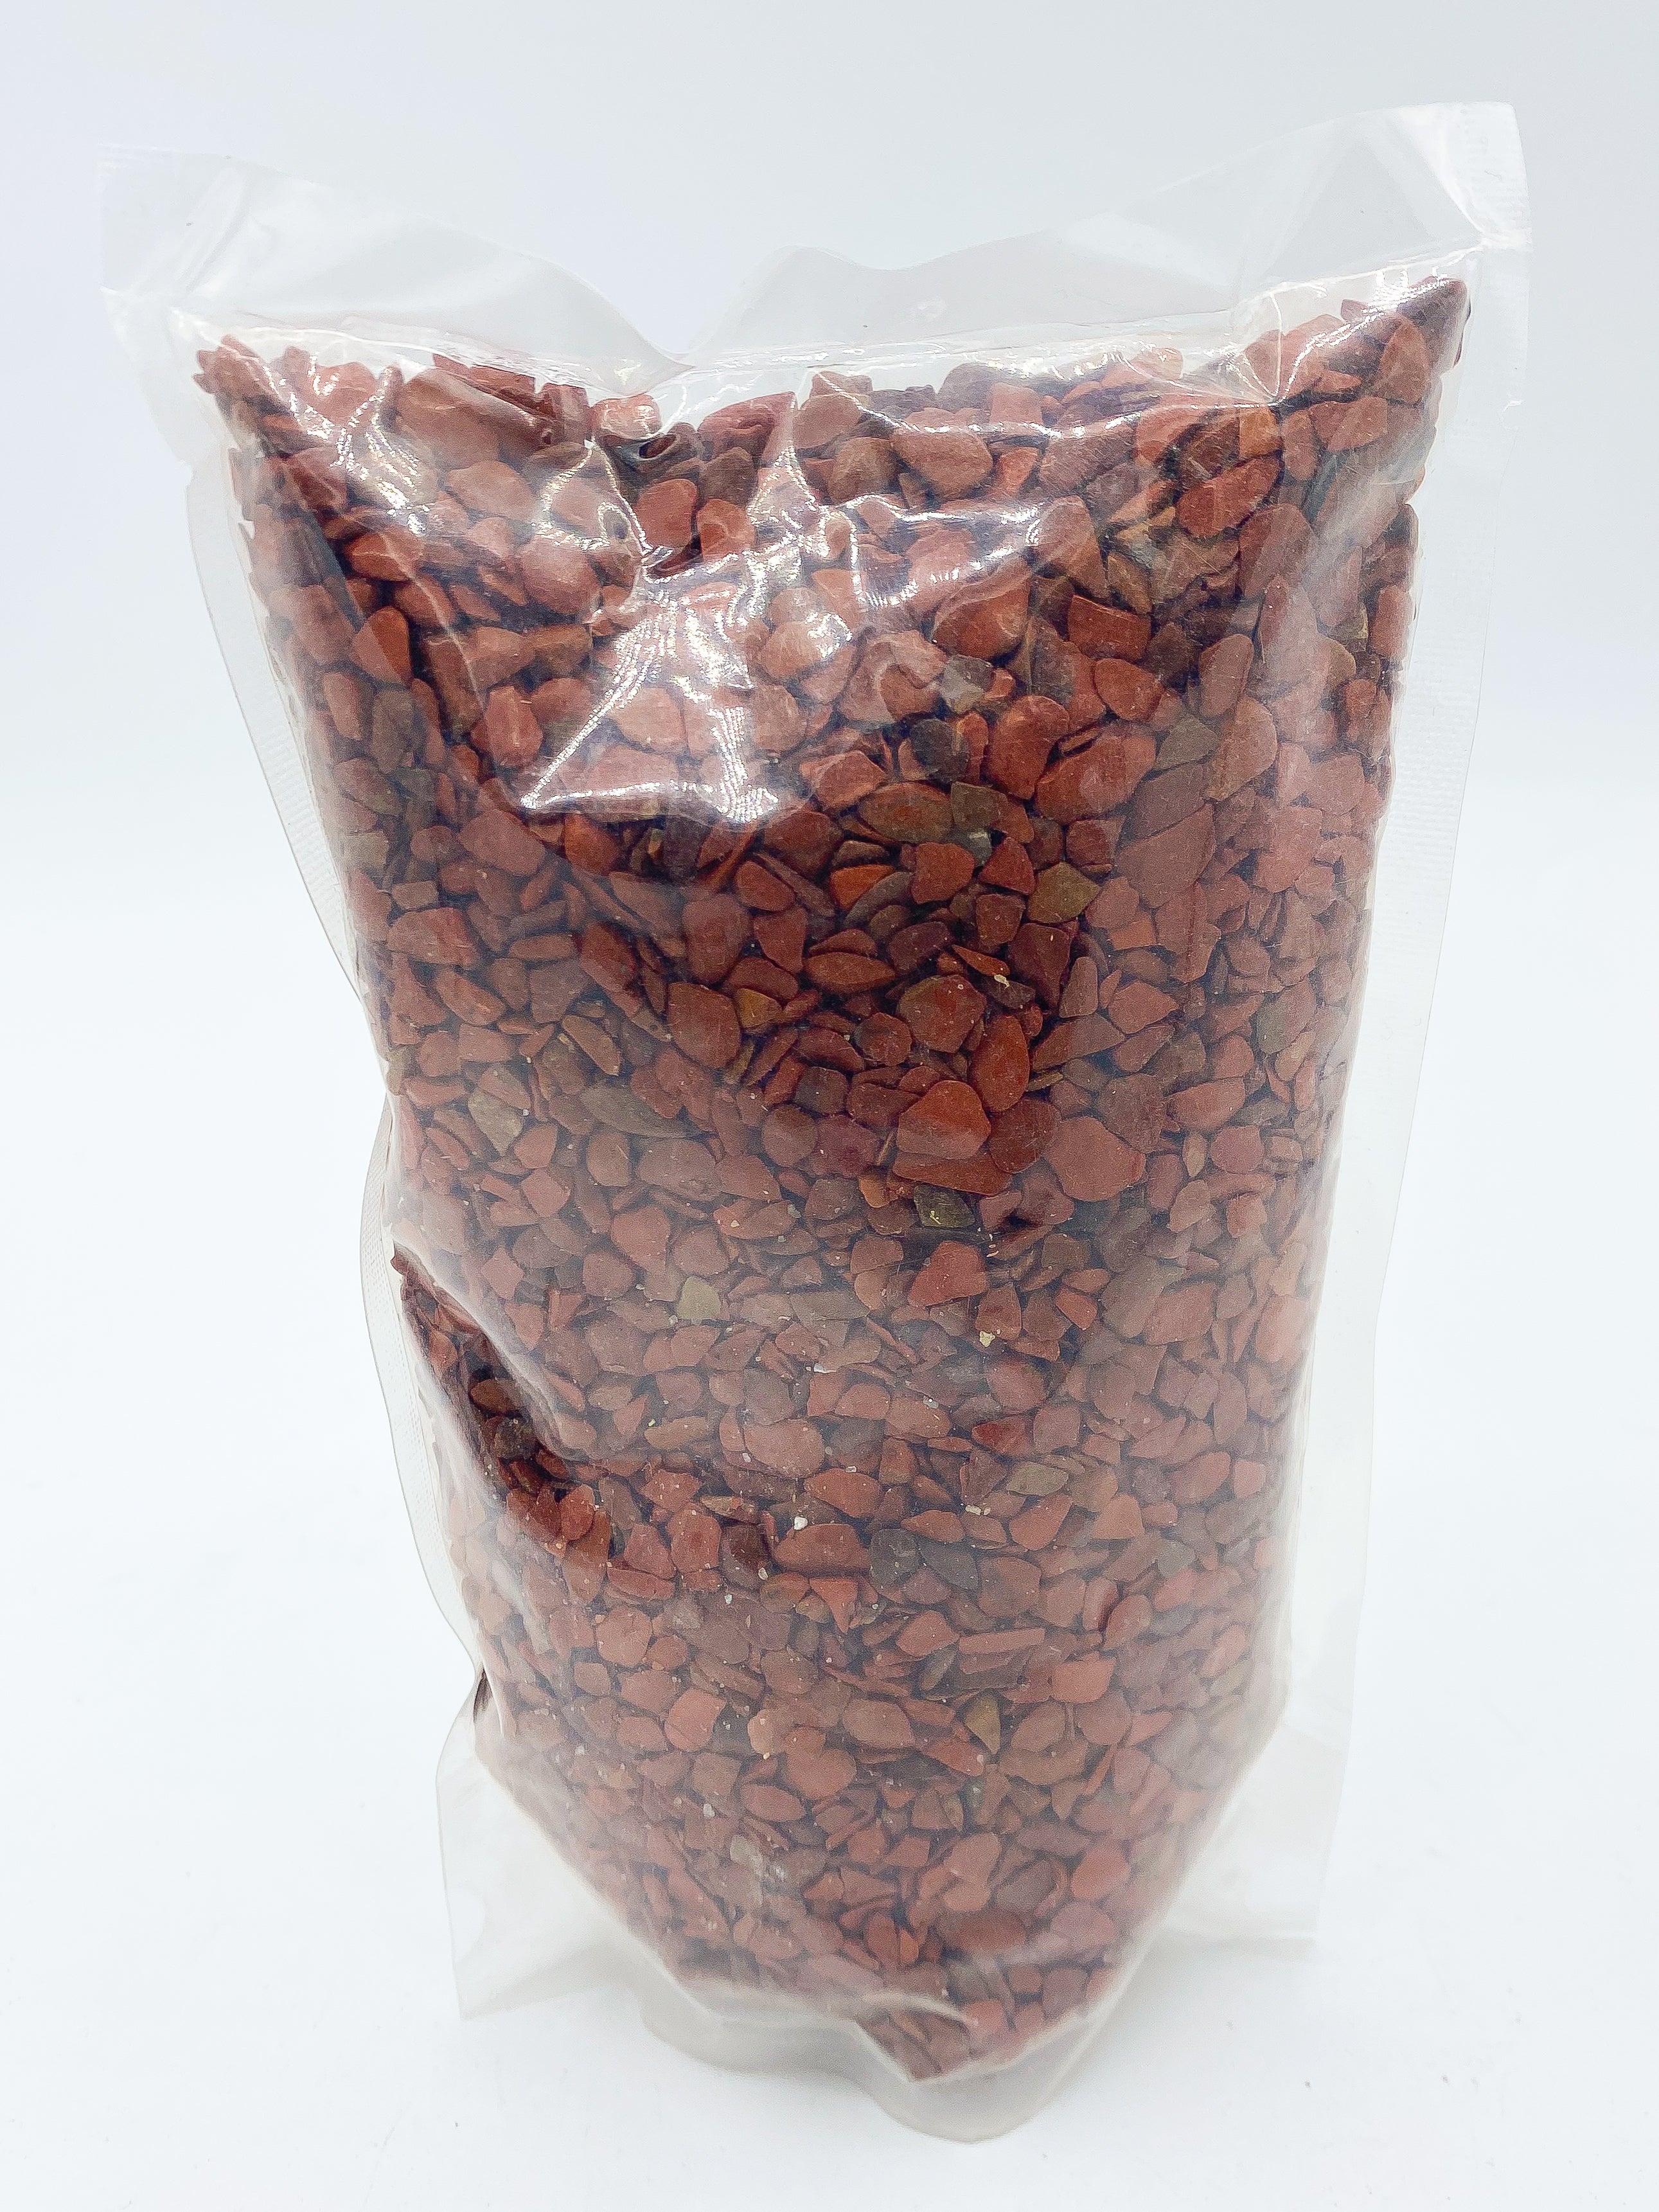 Red Jasper Crystal Chips | Wholesale 1kg Bags